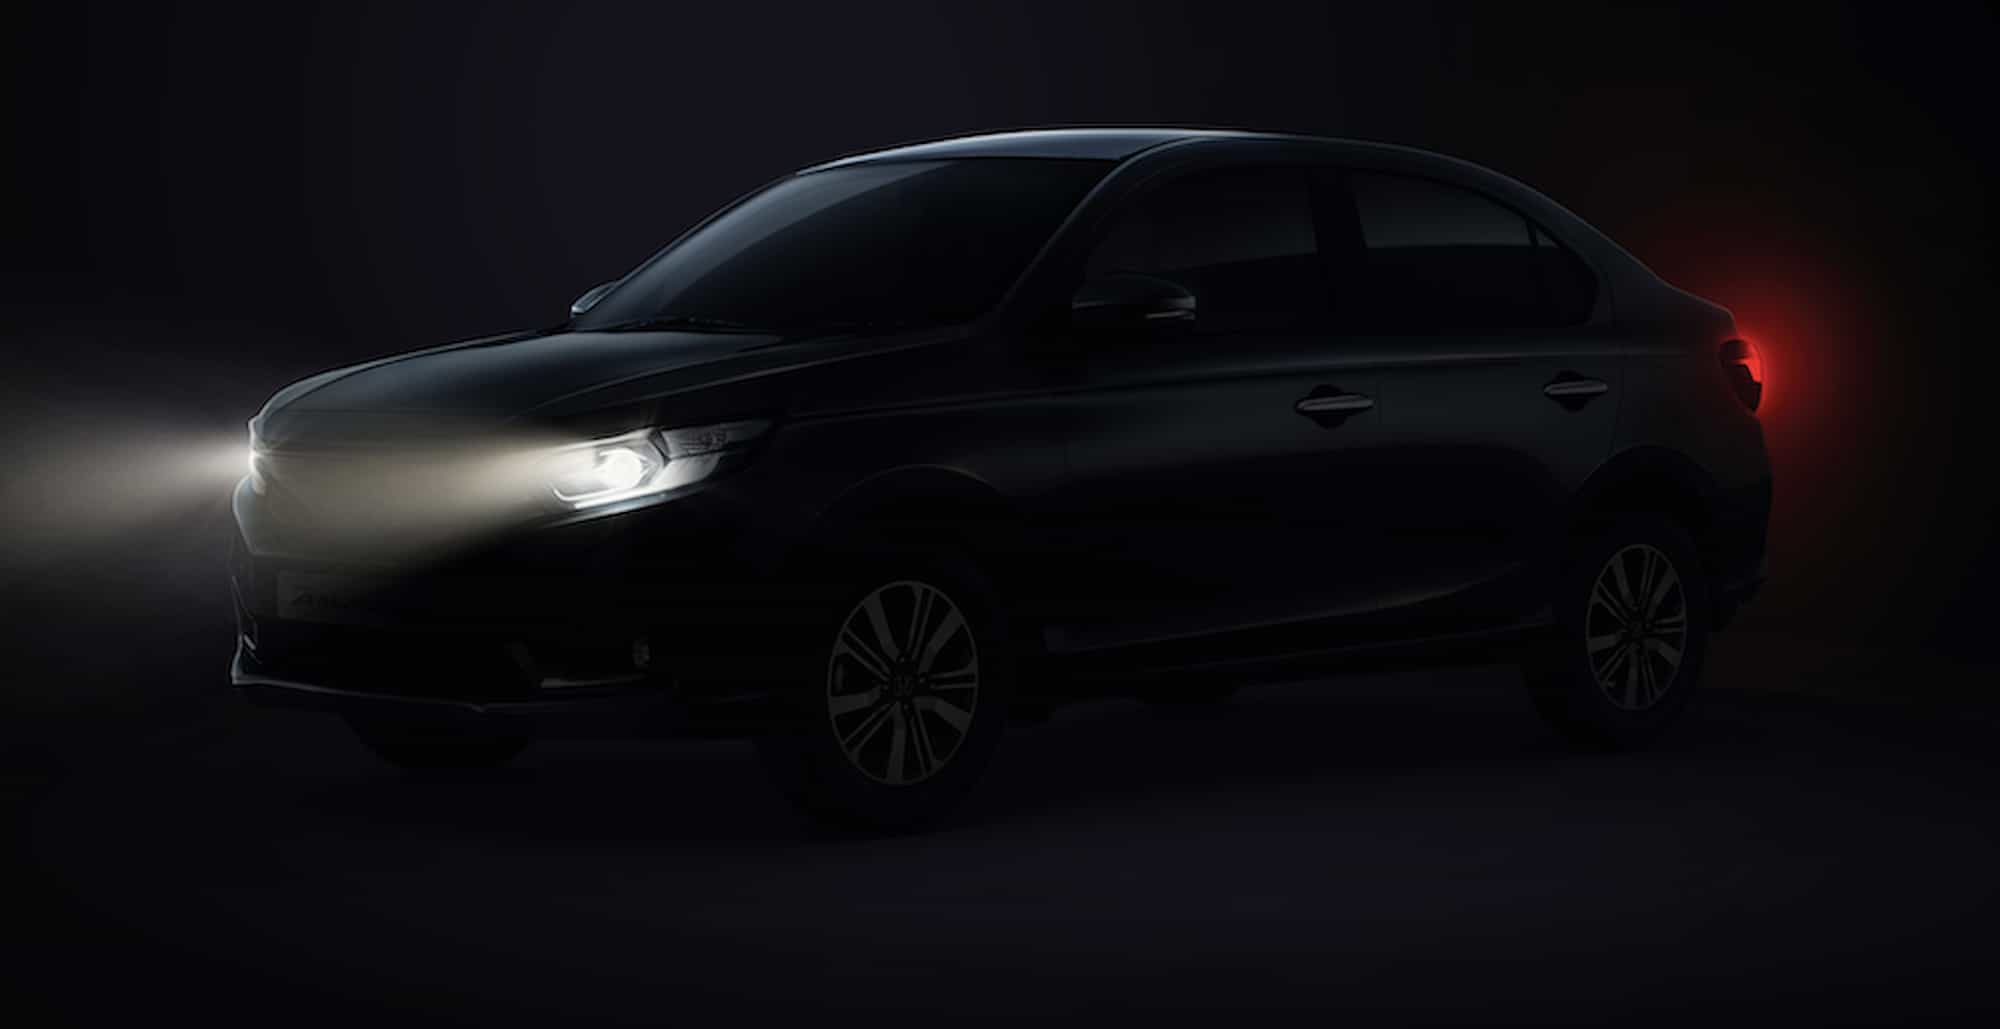 Honda Amaze facelift bookings opened